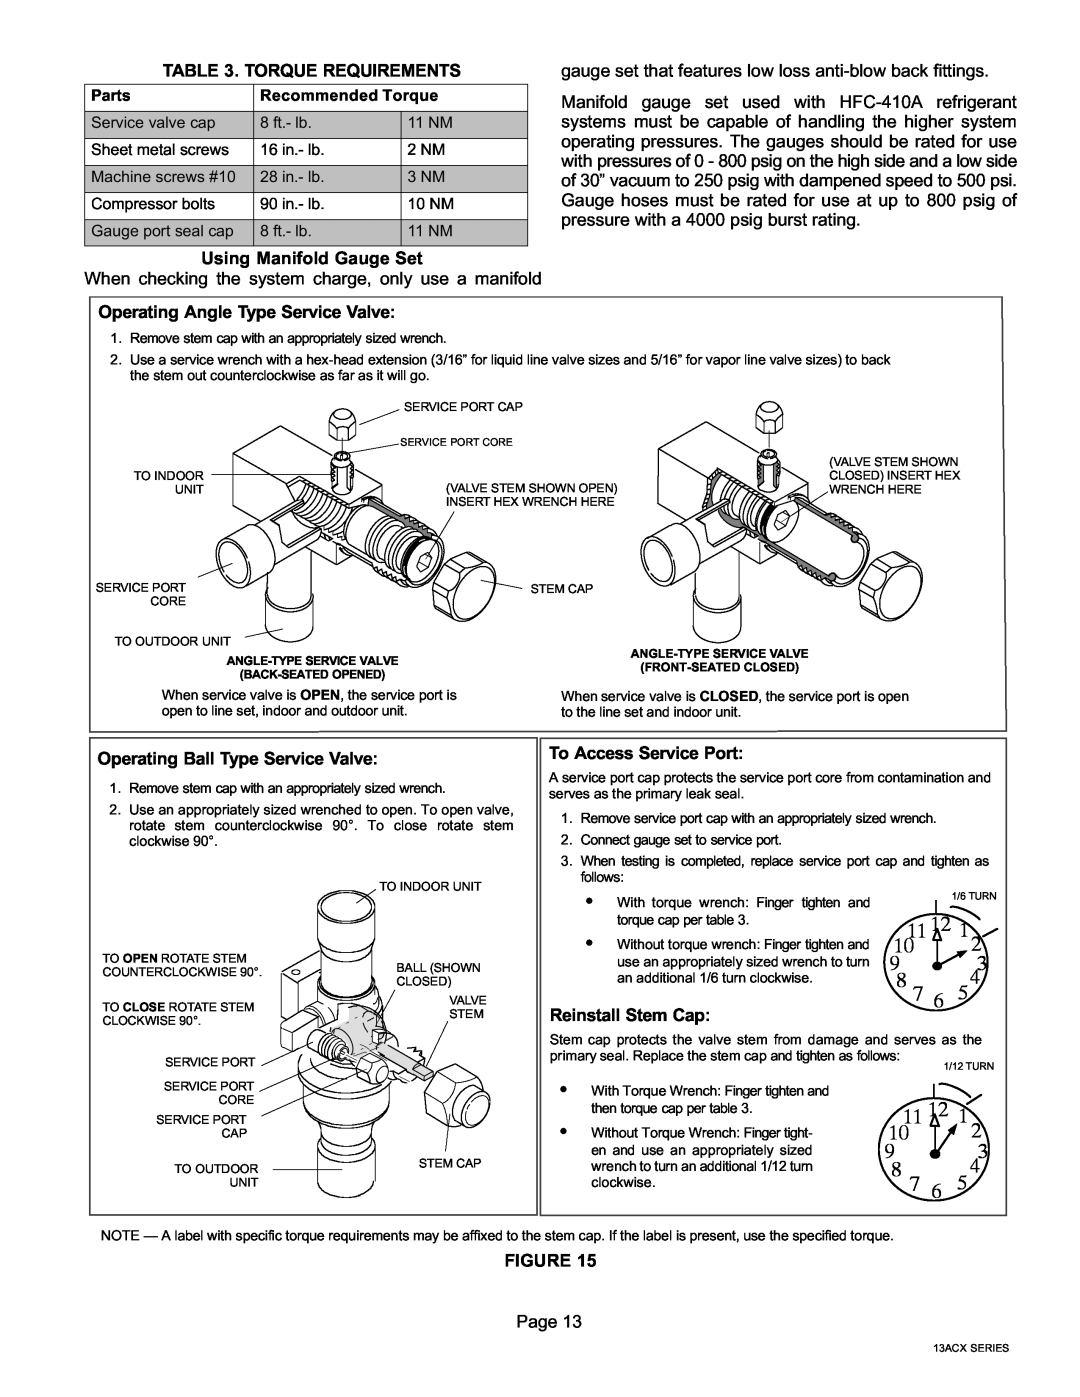 Lennox International Inc Merit Series Air Conditioner Torque Requirements, Using Manifold Gauge Set, Reinstall Stem Cap 